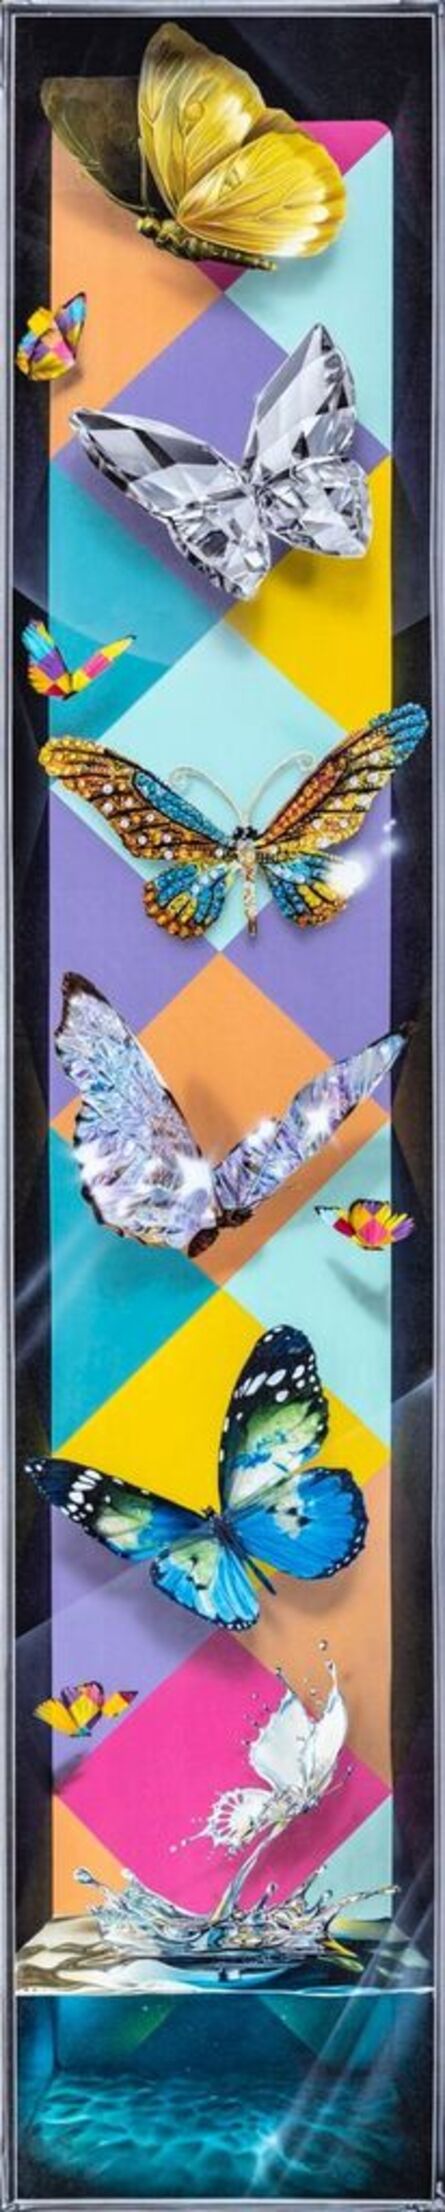 Eduardo Kobra, ‘Sea of Butterflies’, 2022